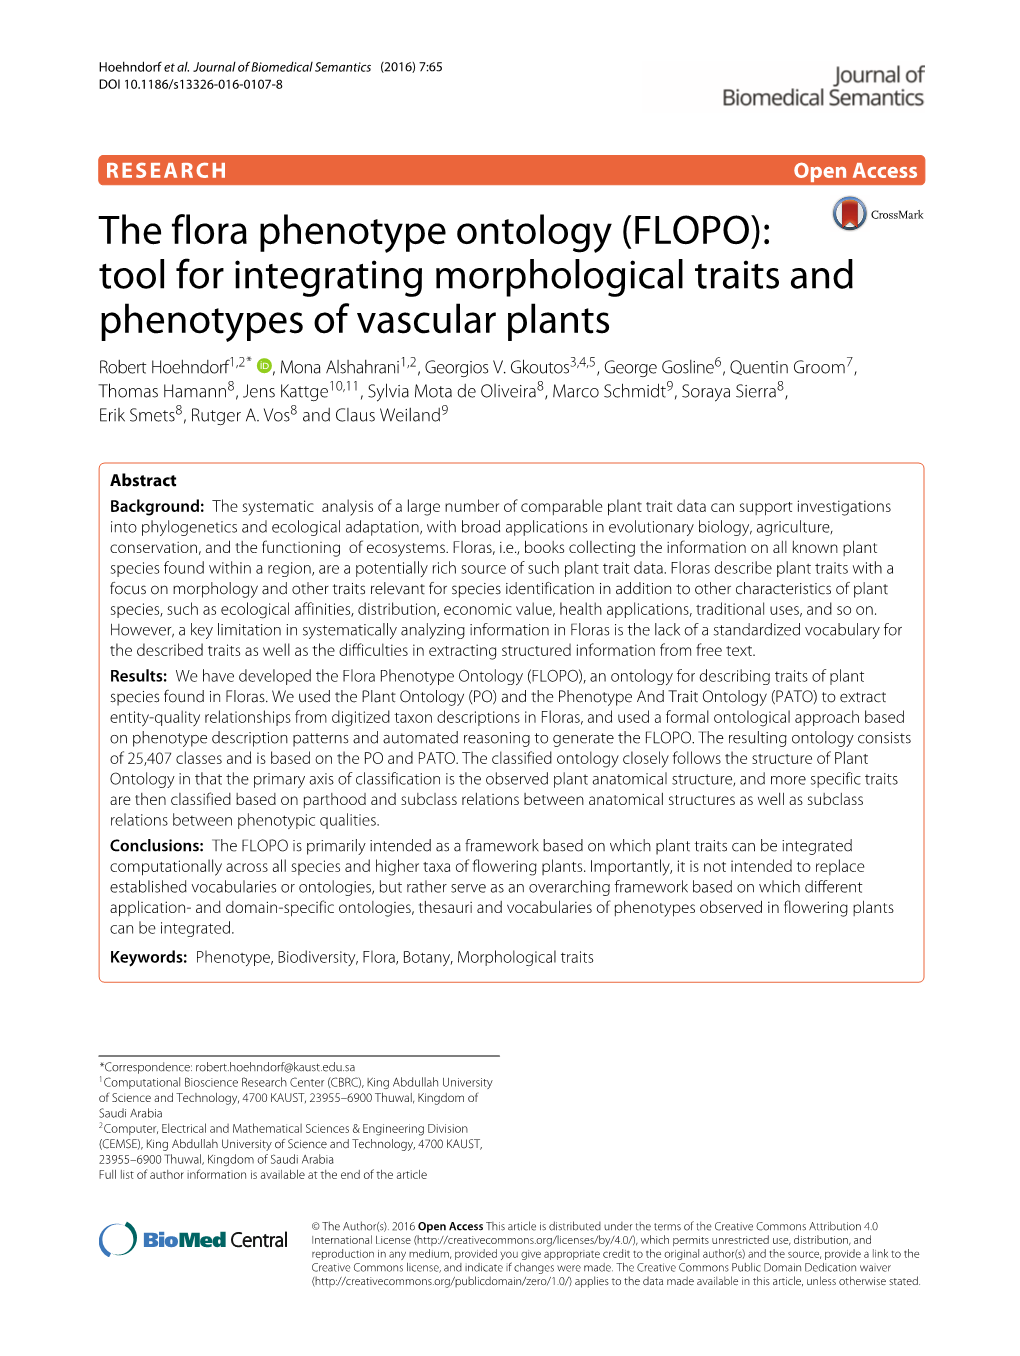 The Flora Phenotype Ontology (FLOPO)